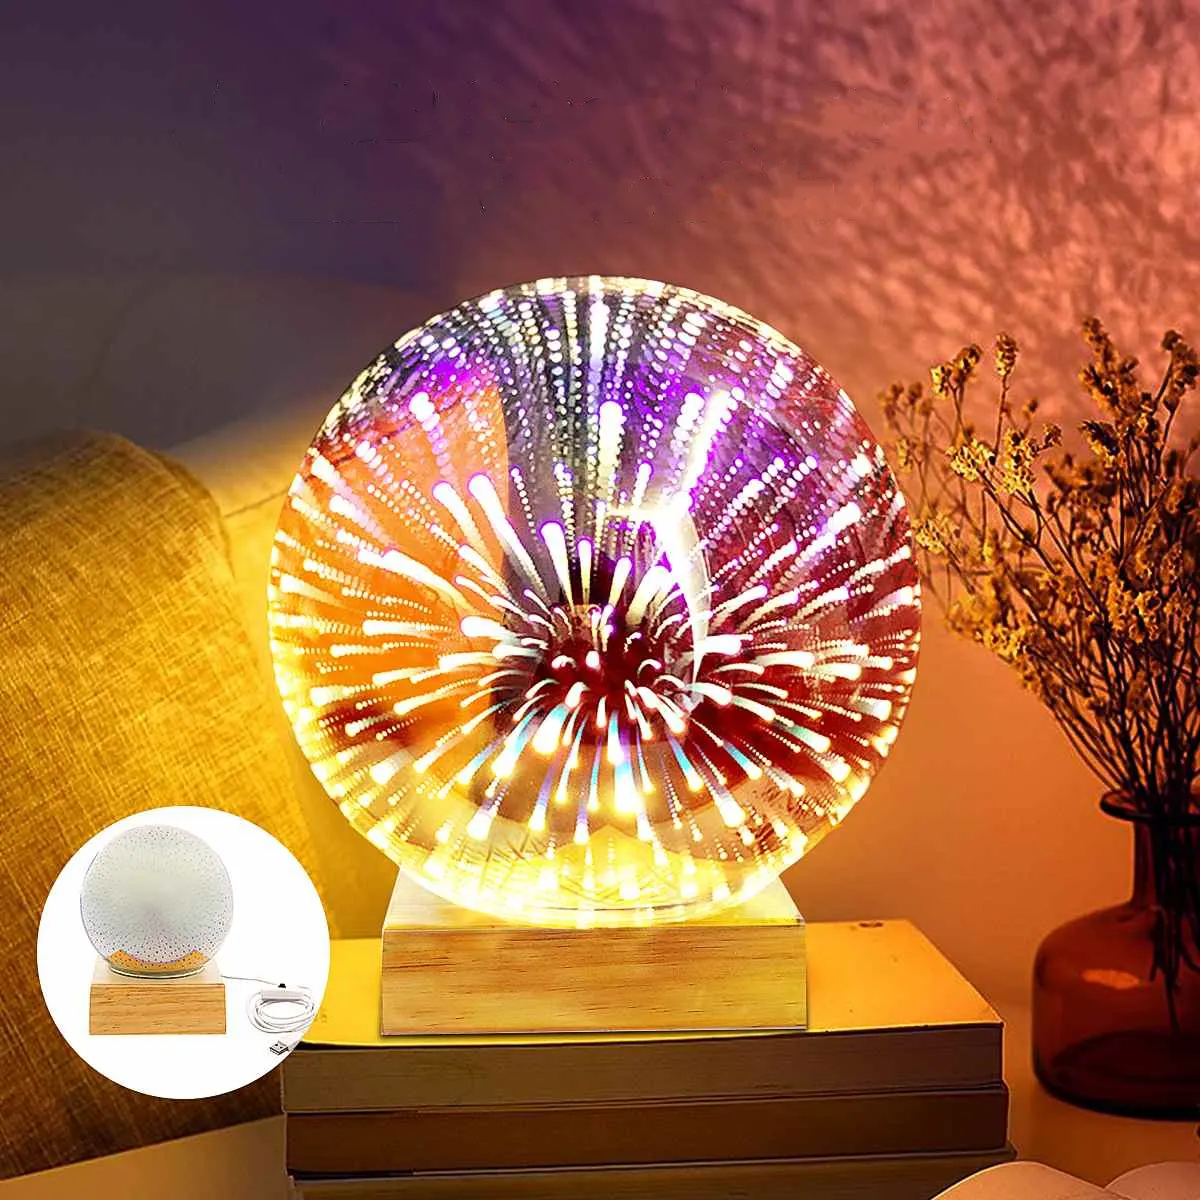 USB 3D LED Crystal USB Sphere Lightning Lamp Colorful Ball Night Lights Magic Glass Sphere Novelty Ball Light Plasma Table Lamp